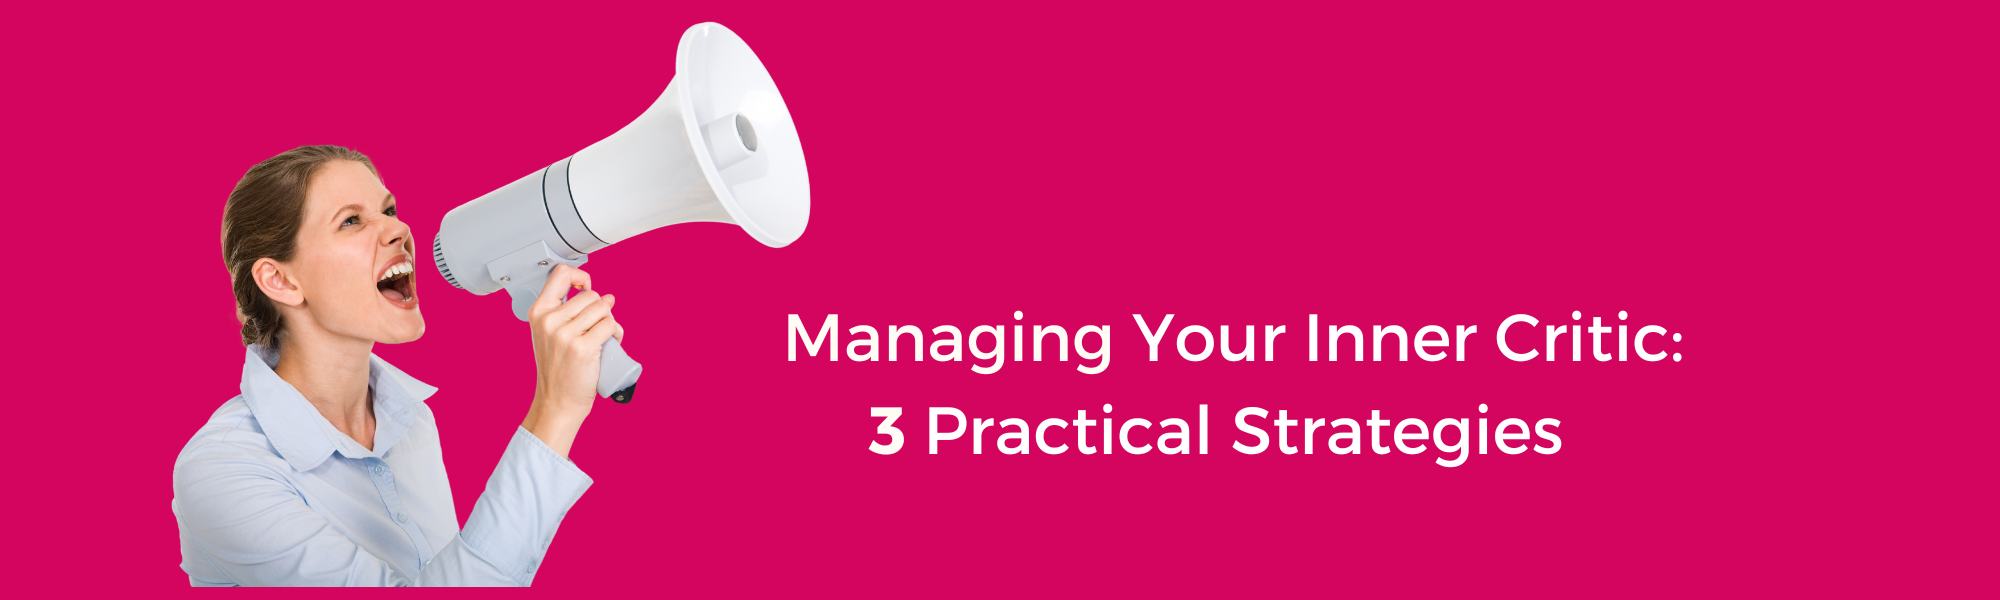 Managing Your Inner Critic: 3 Practical Strategies 